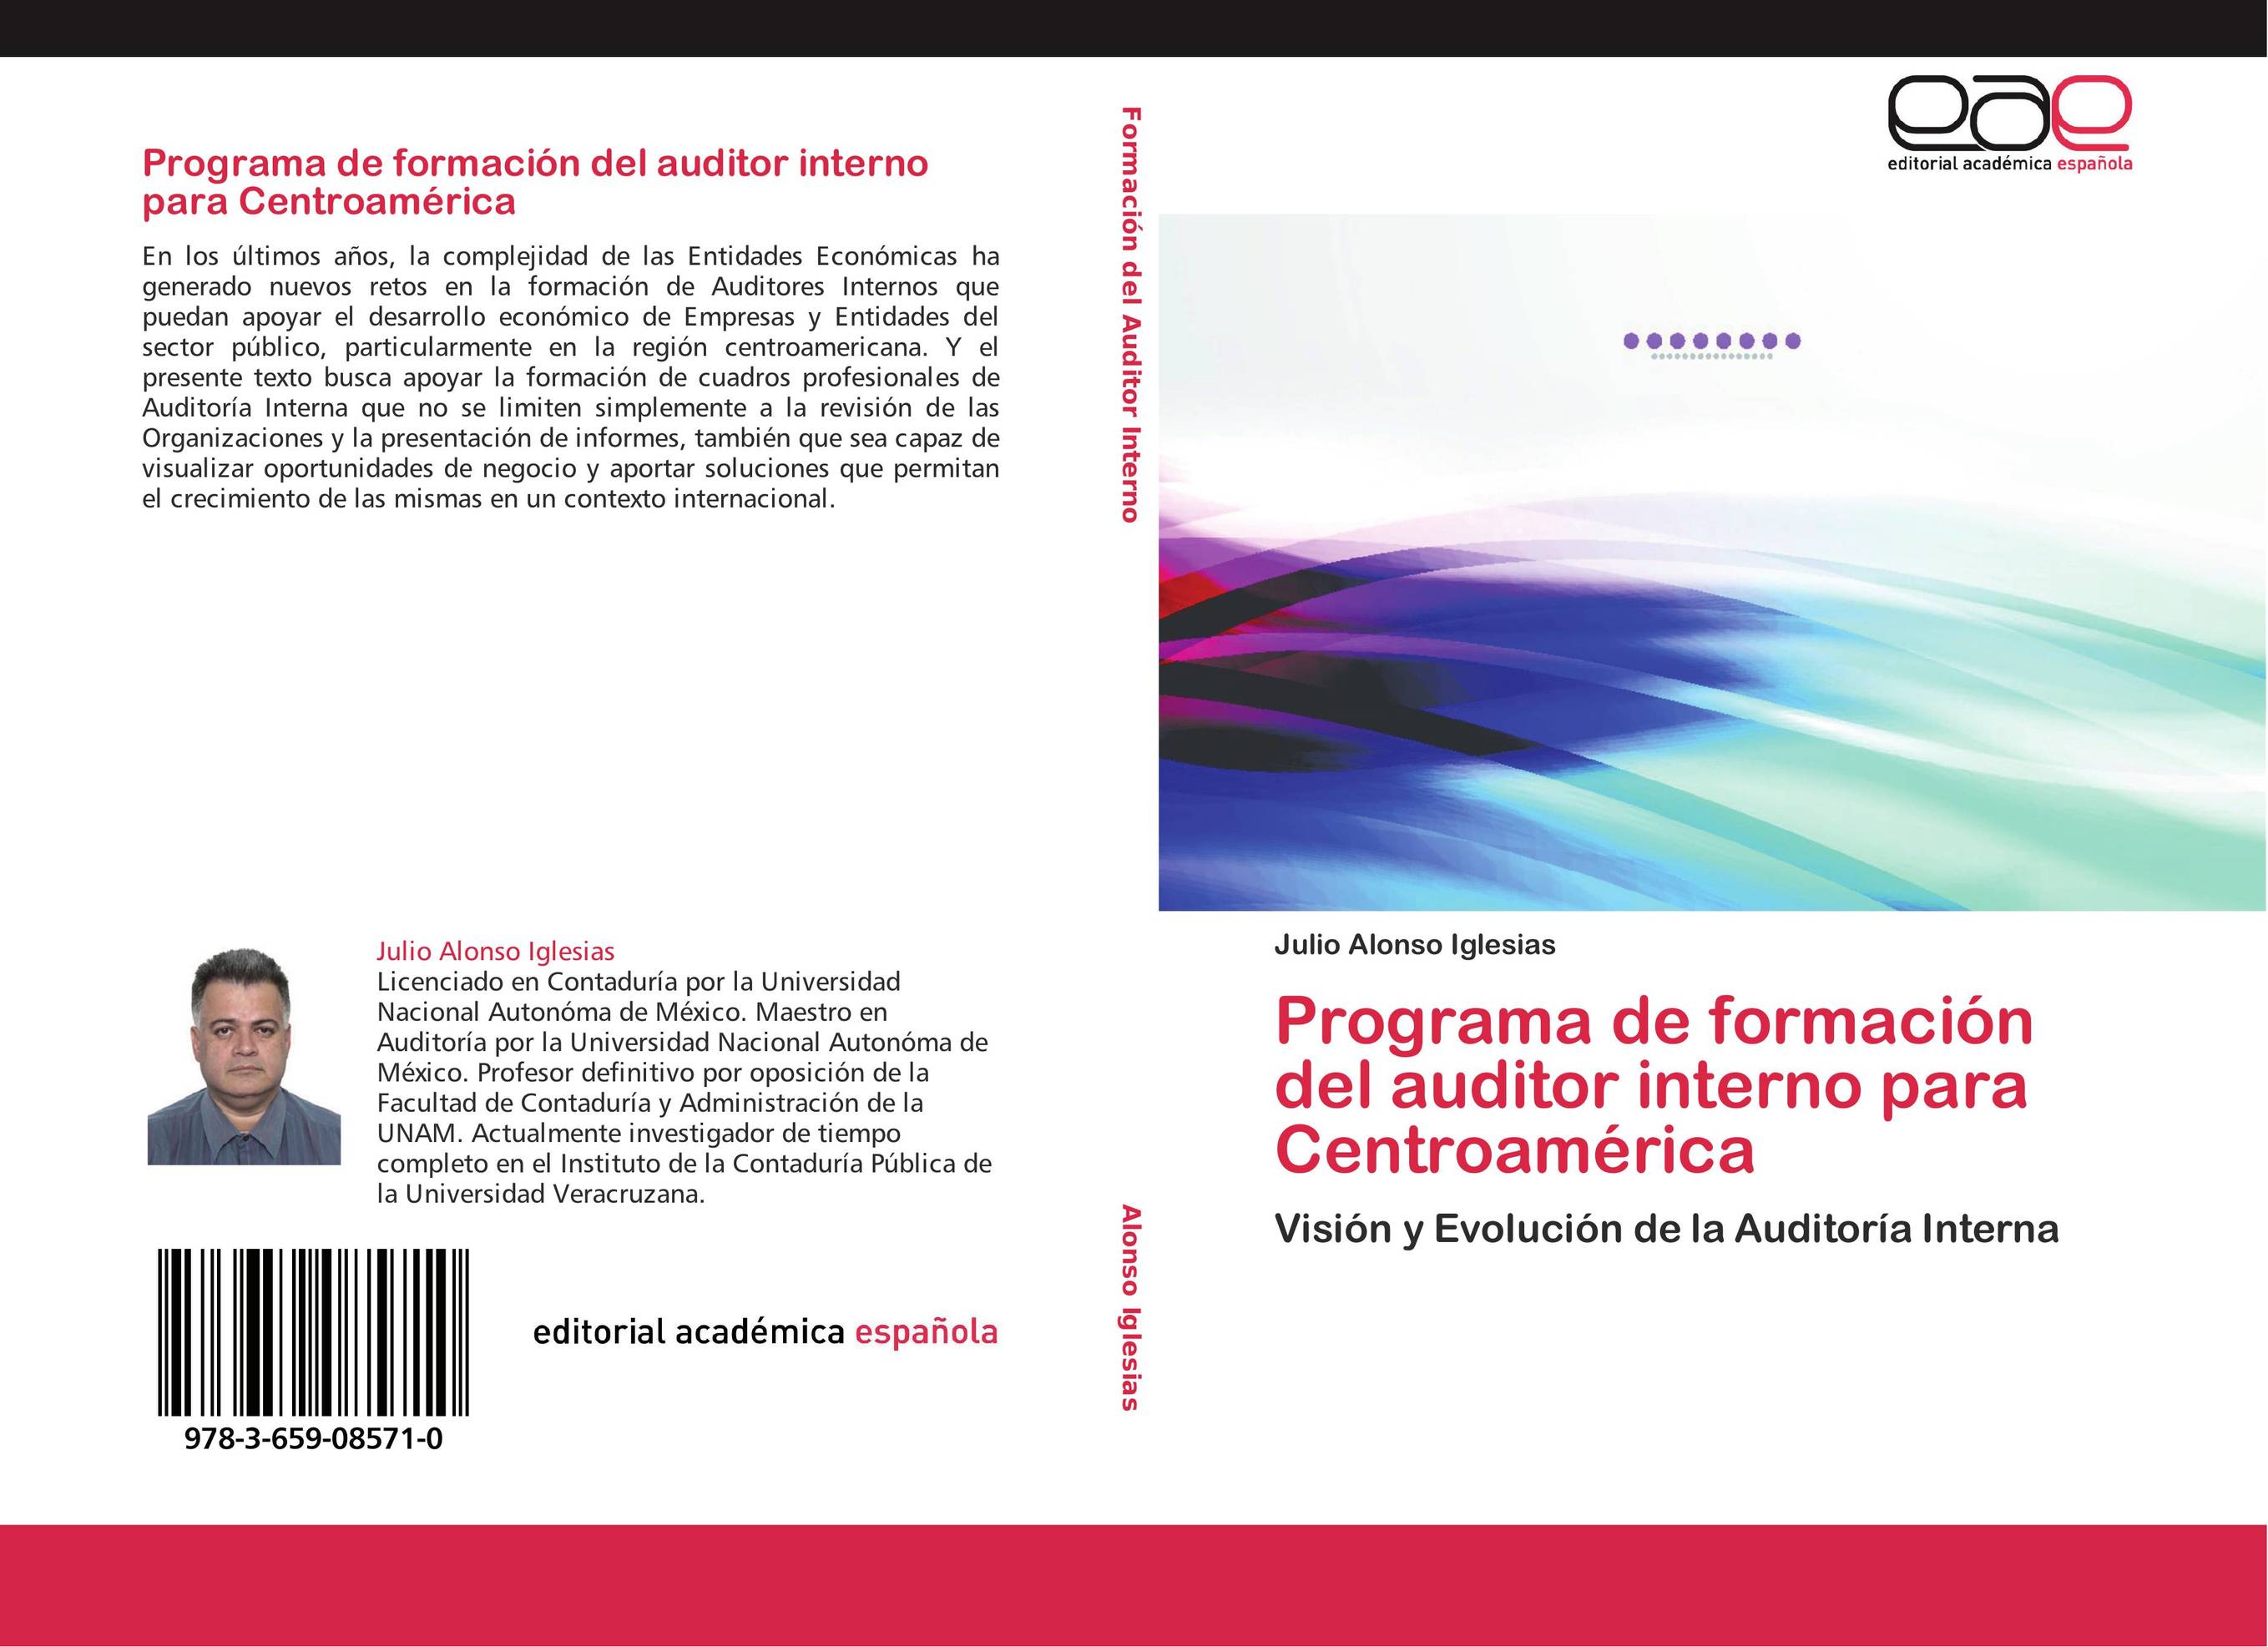 Programa de formación del auditor interno para Centroamérica